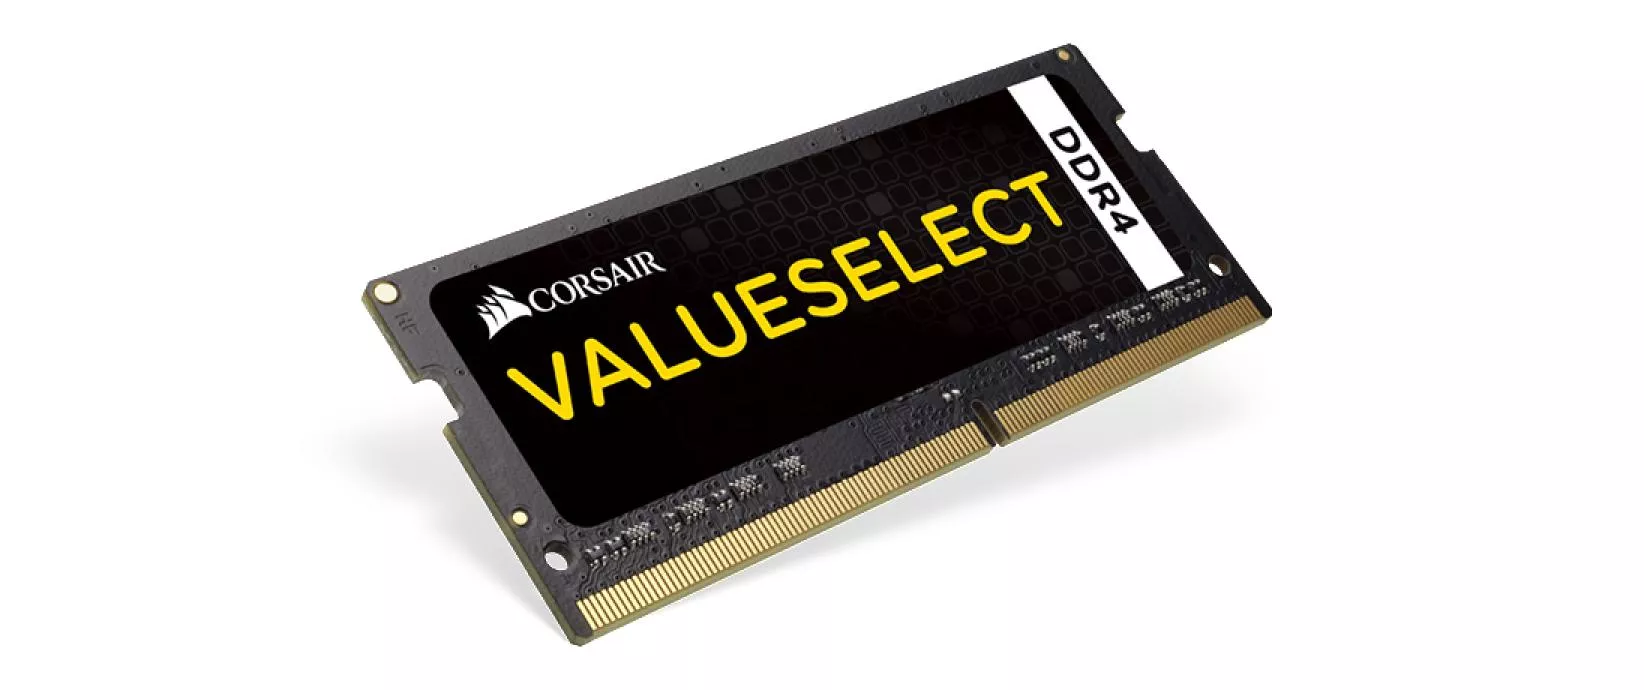 SO-DDR4 RAM ValueSelect 2133 MHz 1x 8 GB